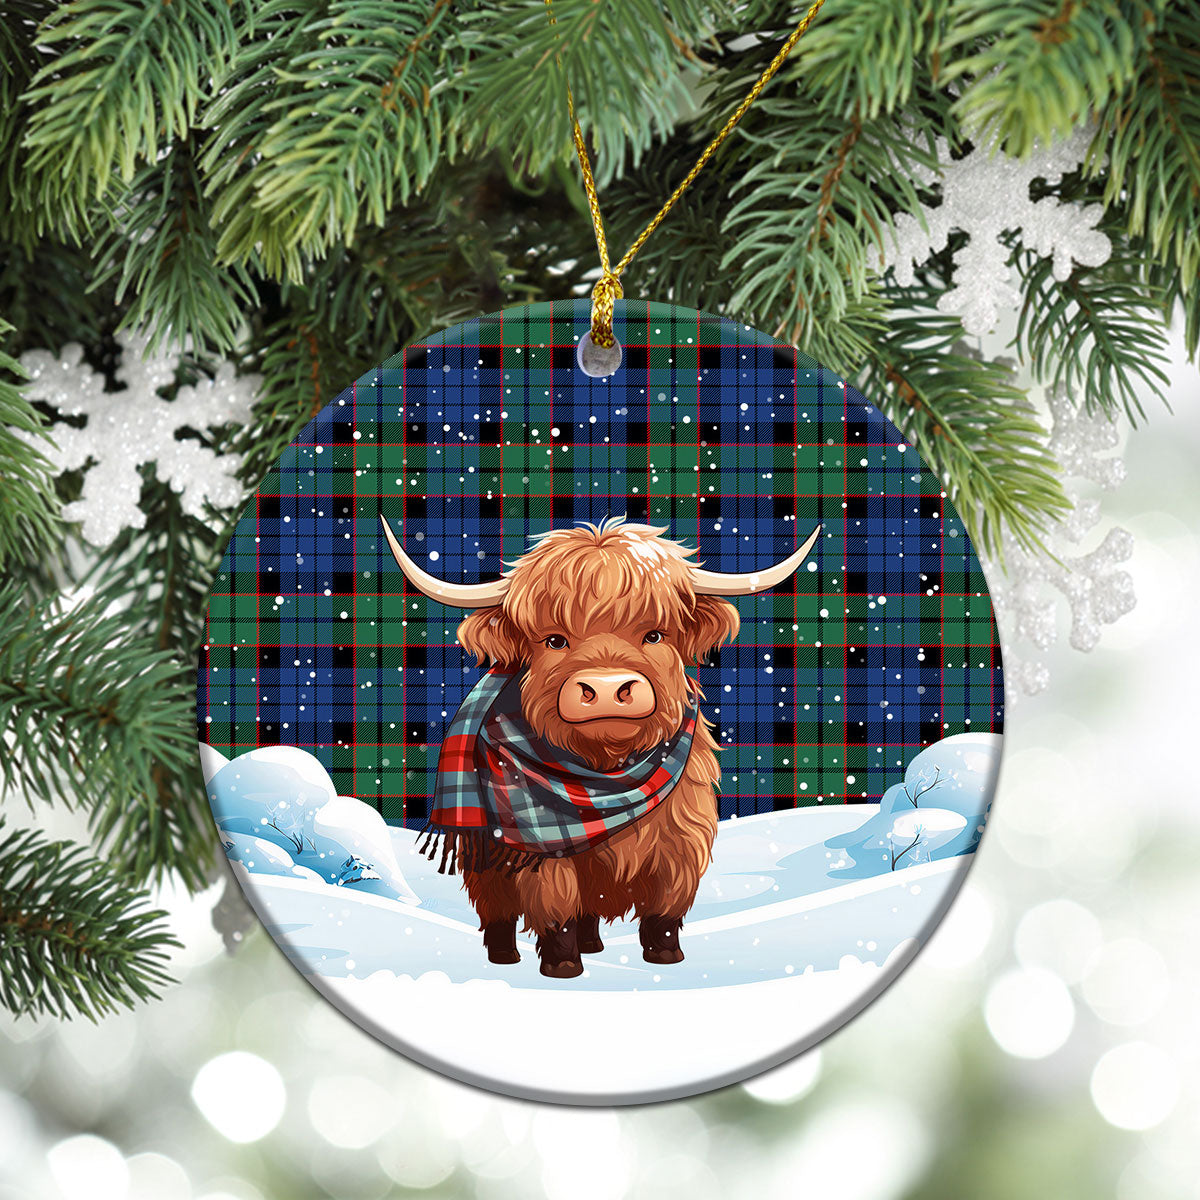 Fletcher Ancient Tartan Christmas Ceramic Ornament - Highland Cows Snow Style